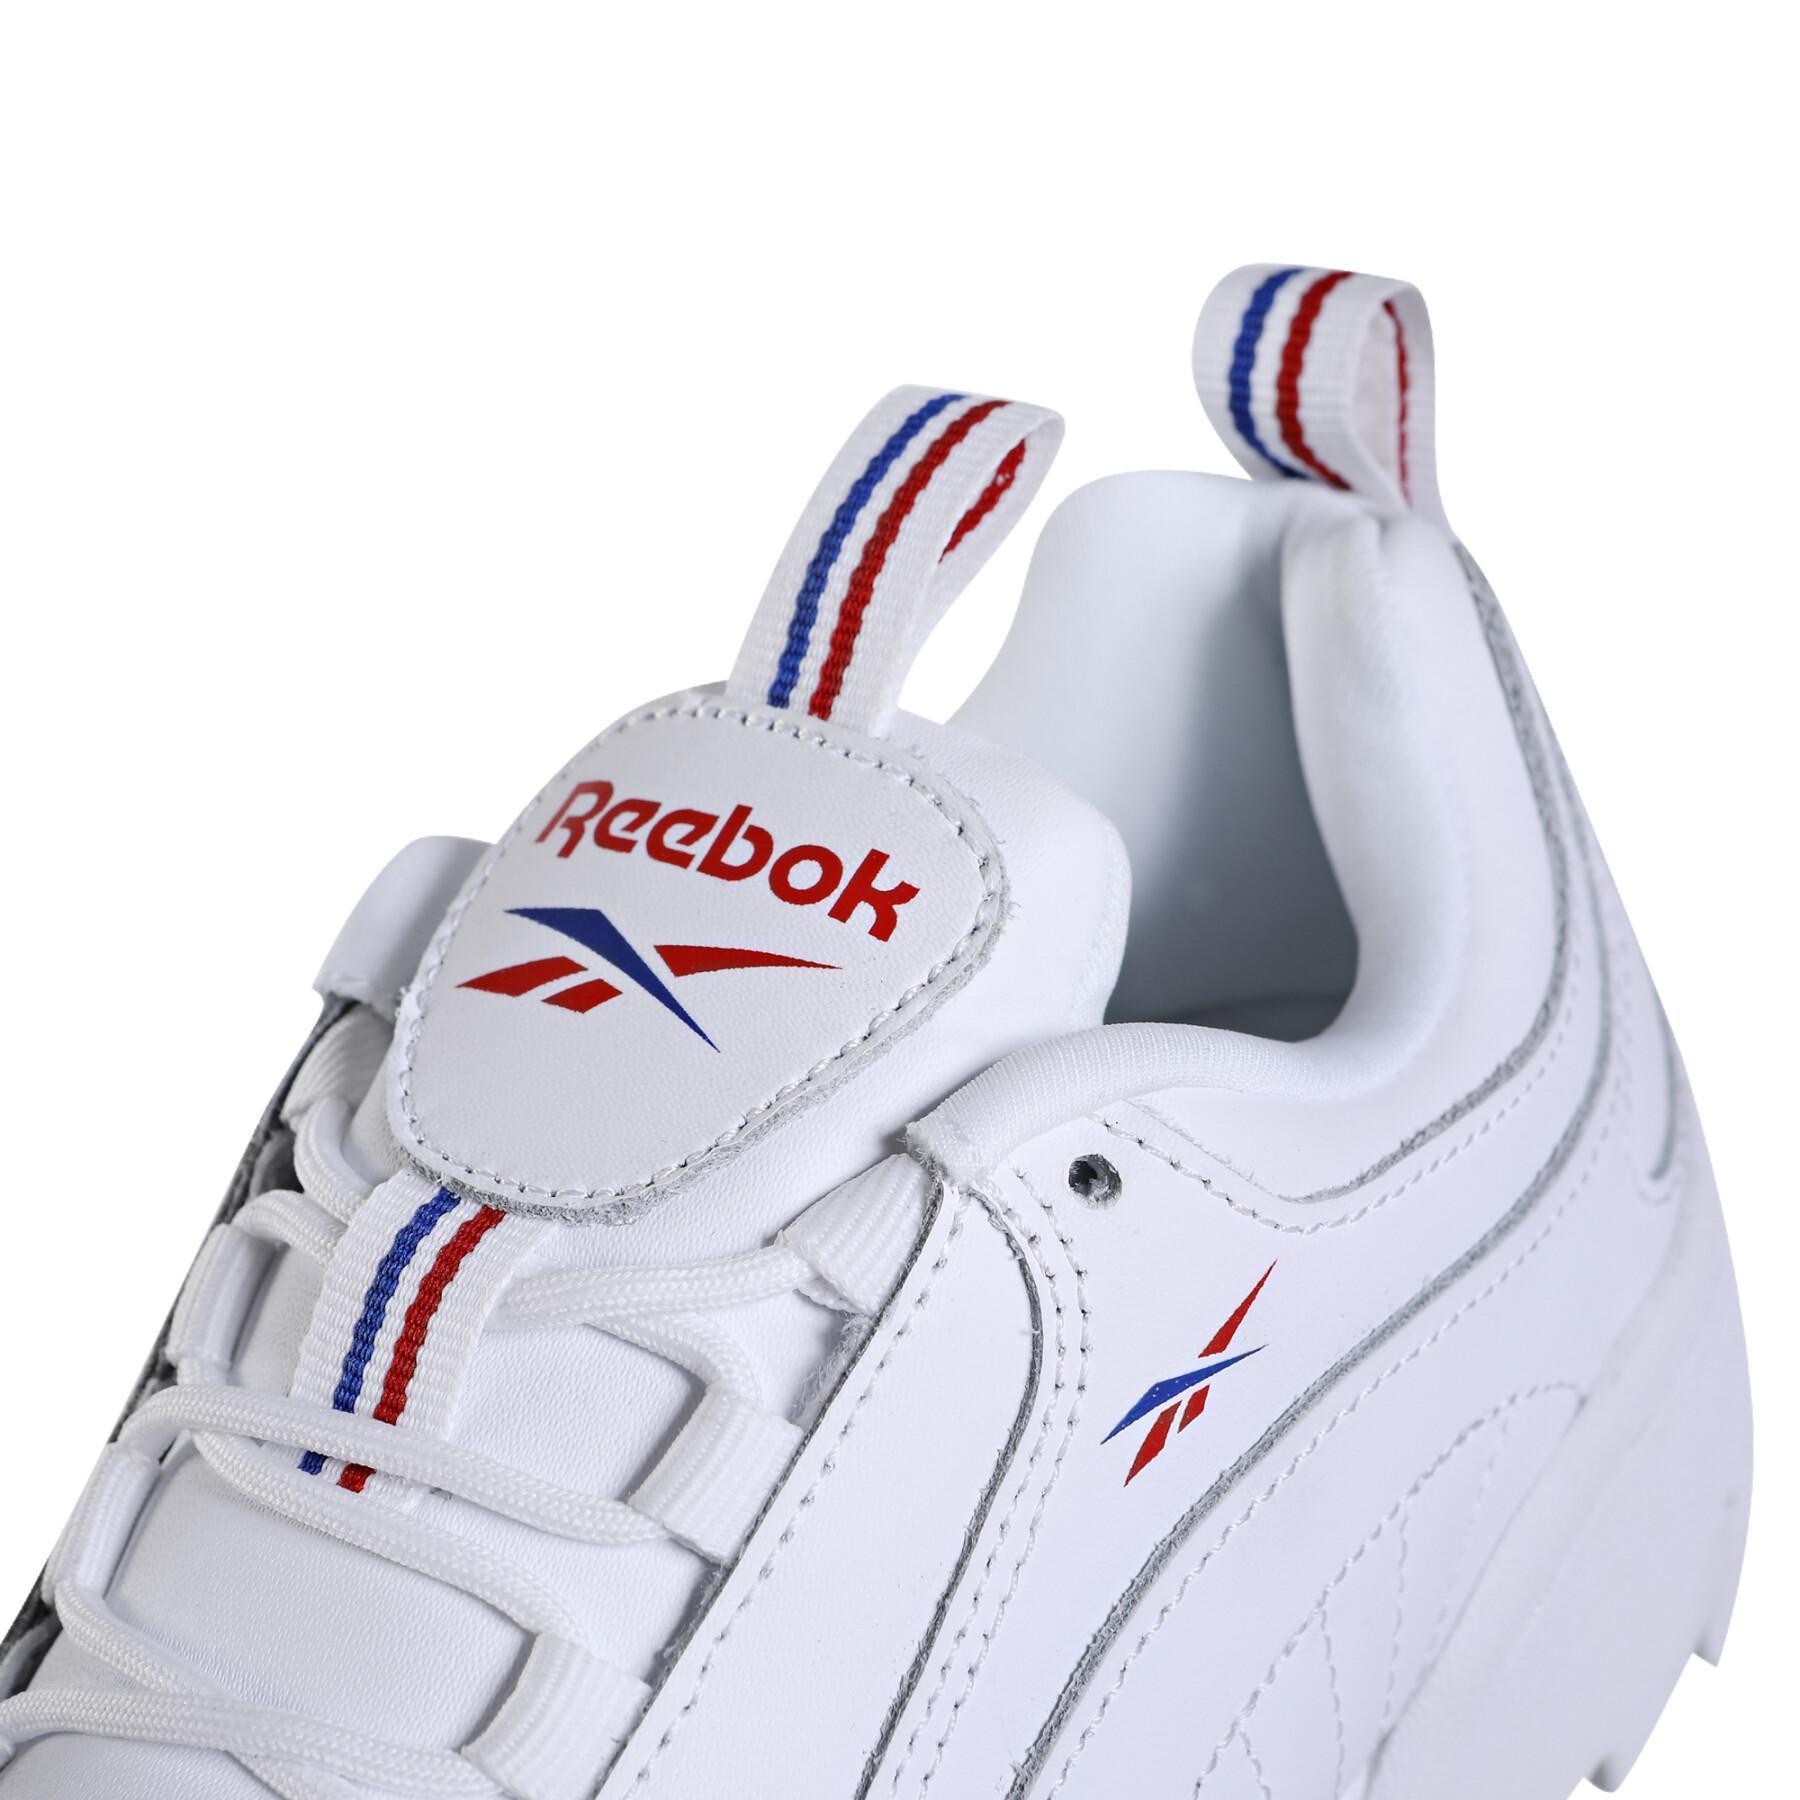 Reebok DV6619 Rivyx Ripple Training shoes white red sneakers 